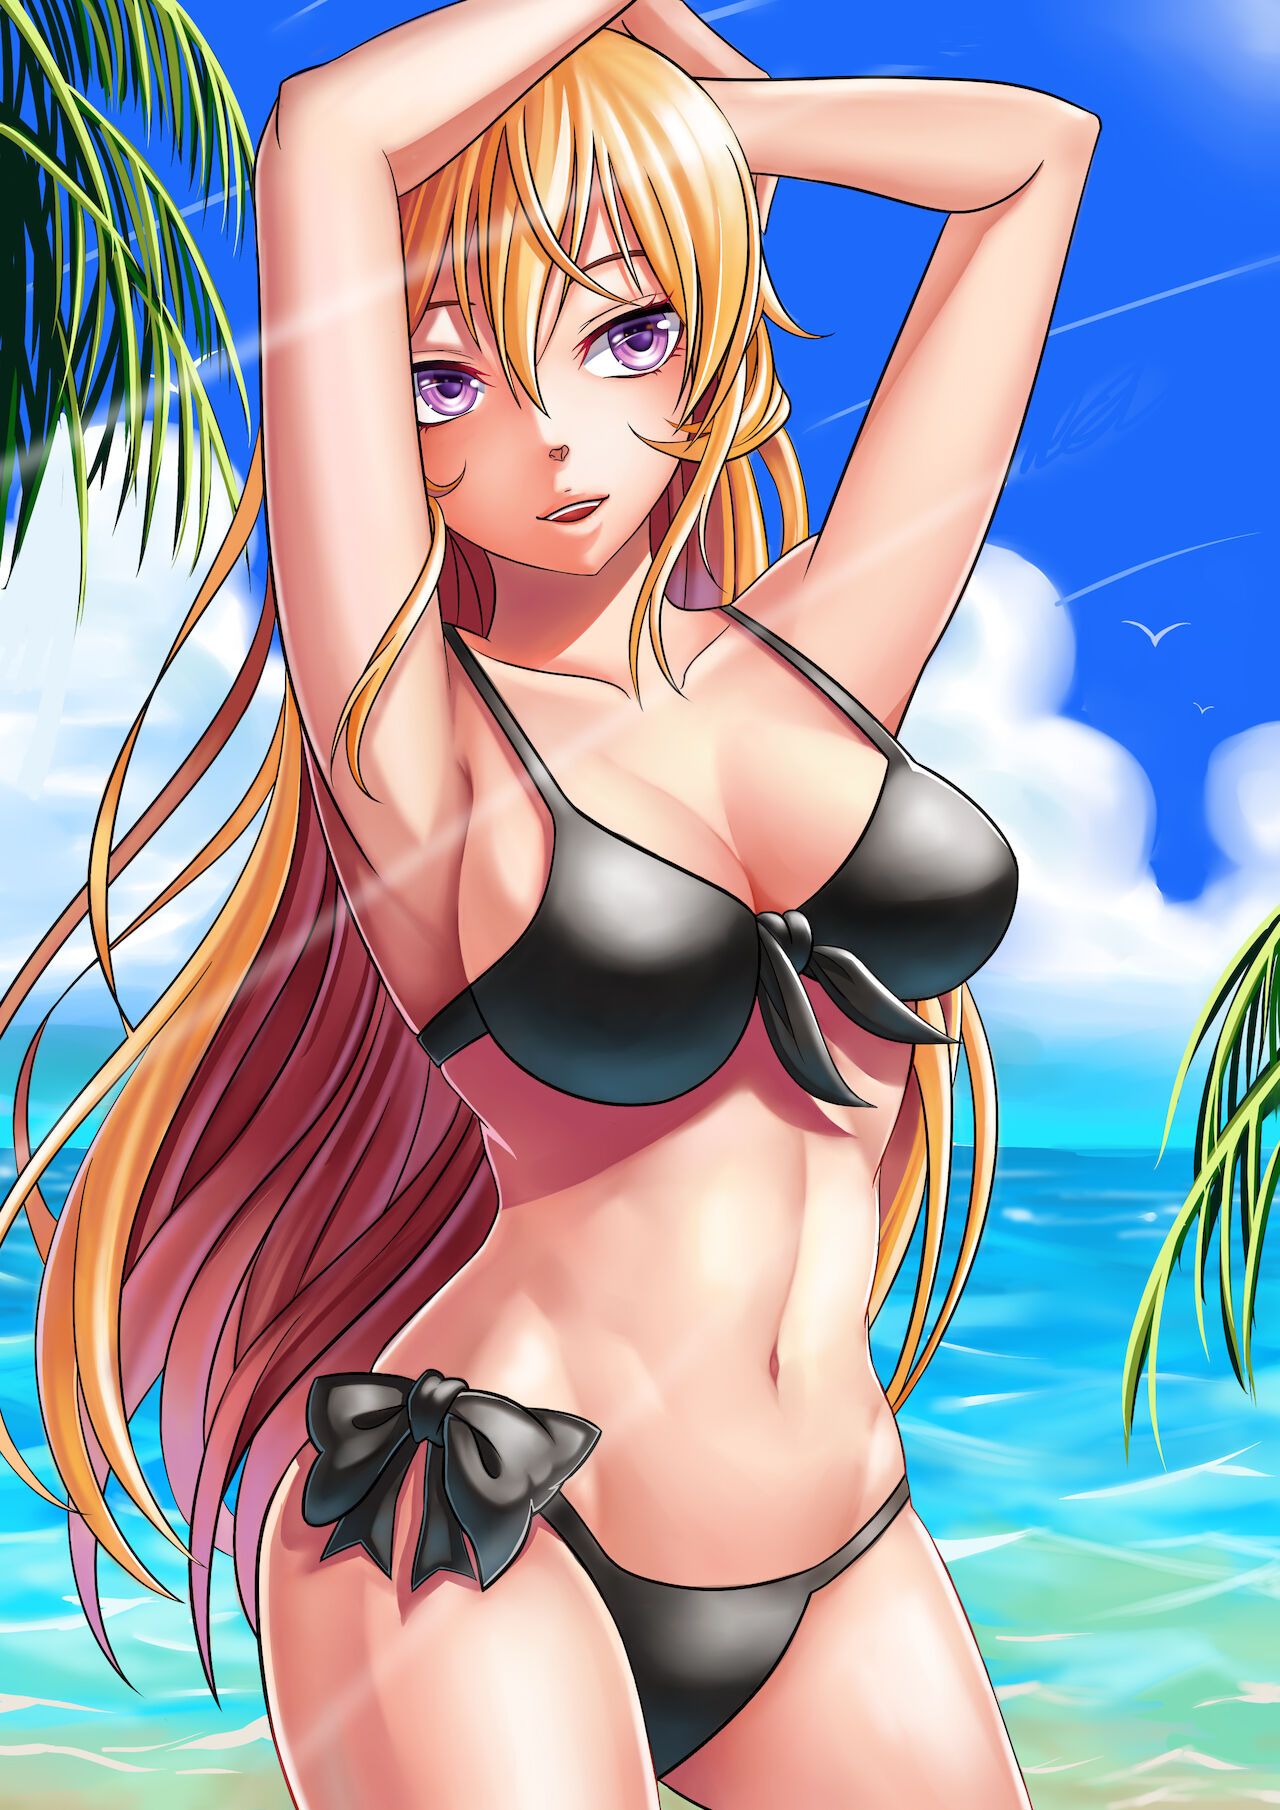 Anime girls in bikinis 21